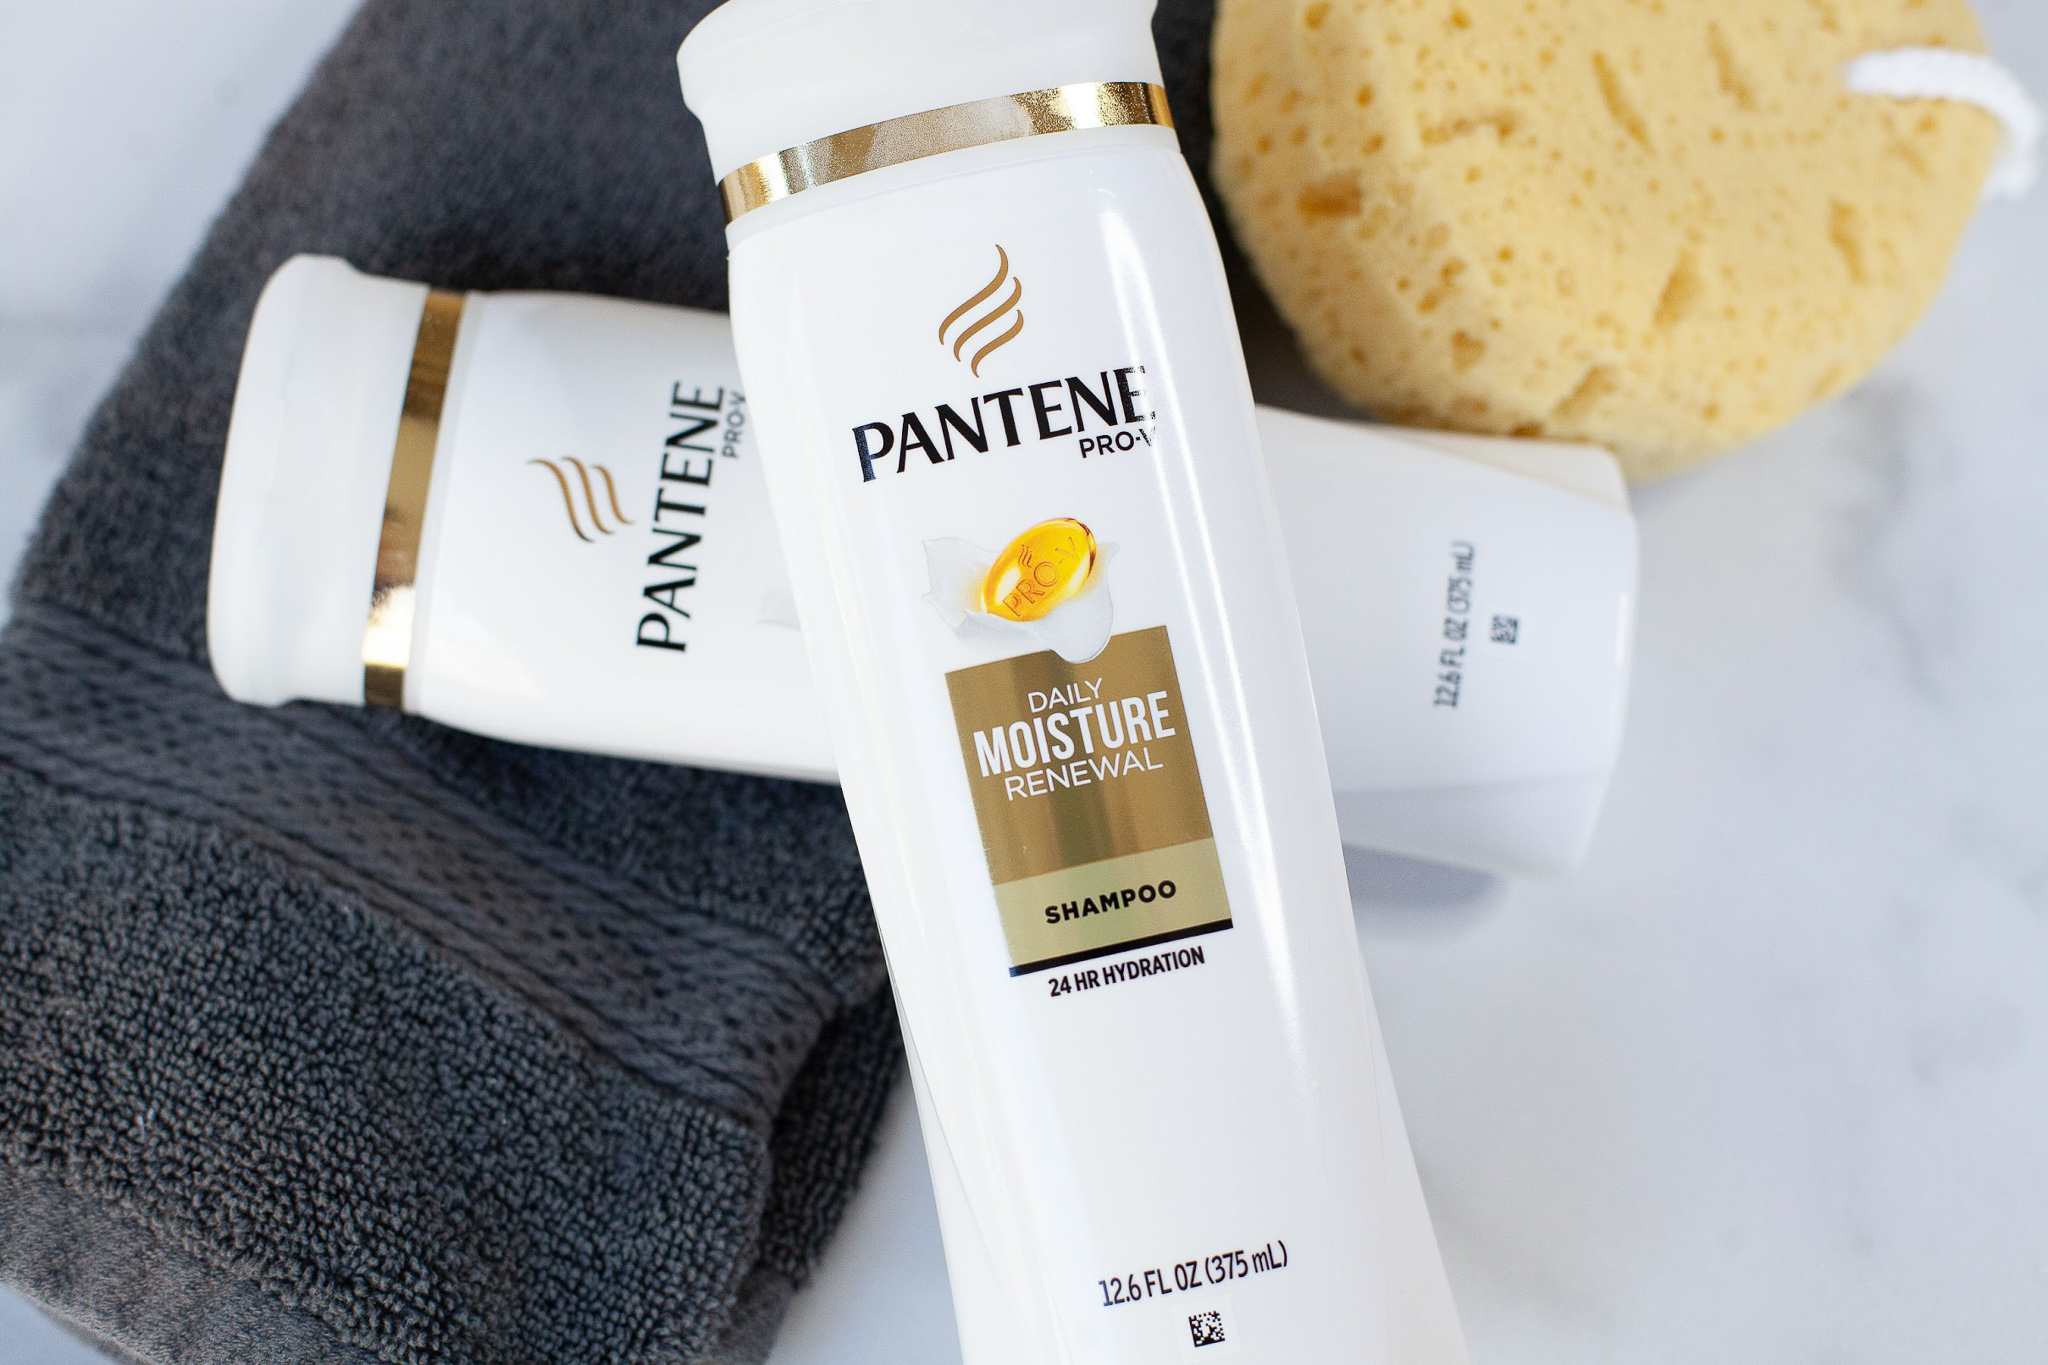 Get Pantene Hair Care As Low As $3.38 At Publix